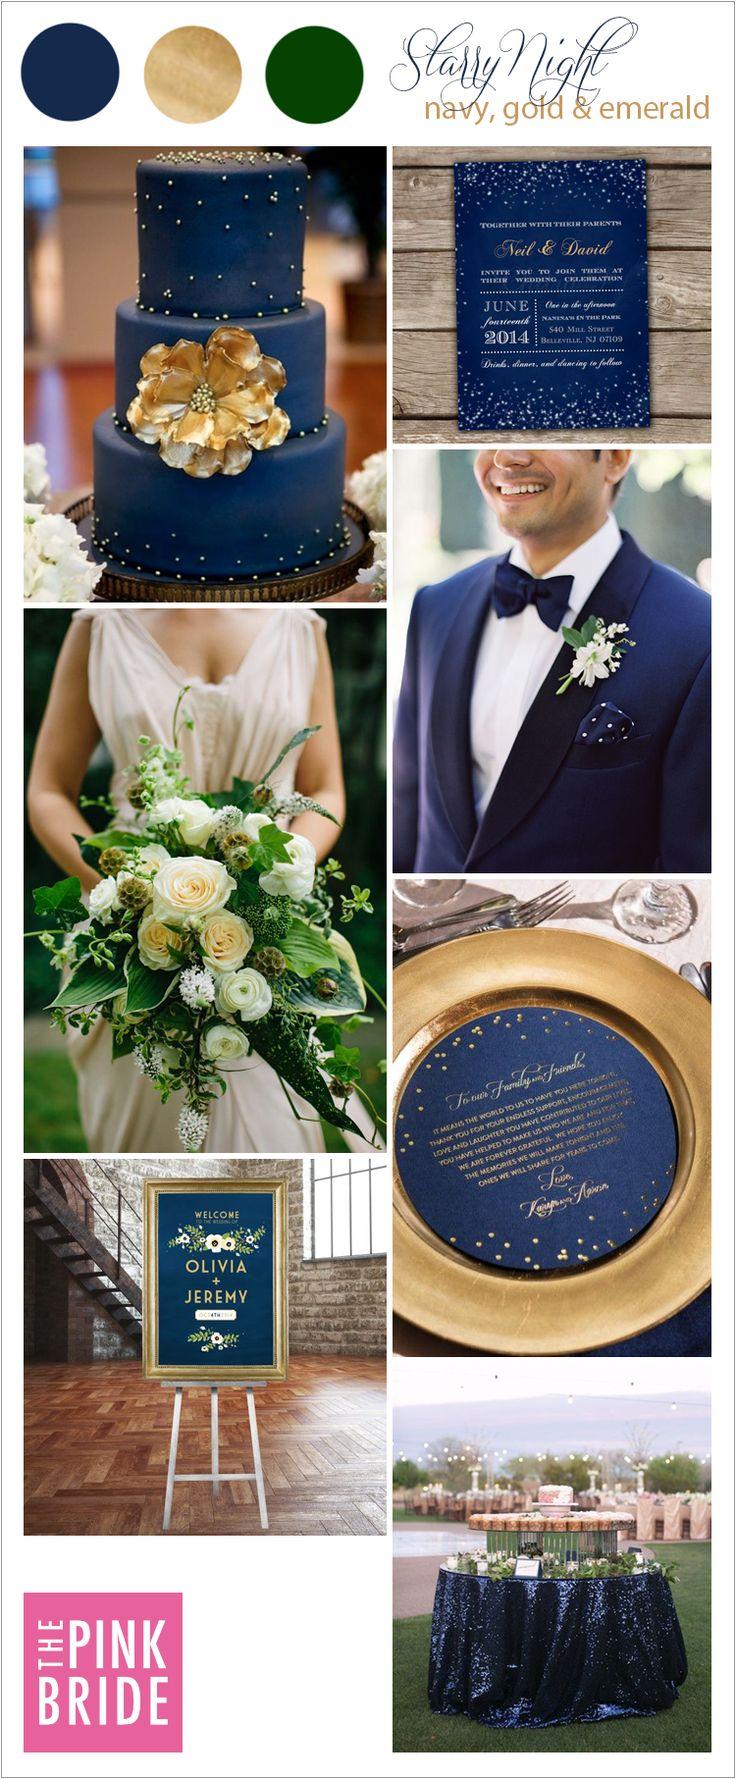 Wedding - Wedding Color Board: Starry Night Navy, Gold & Emerald